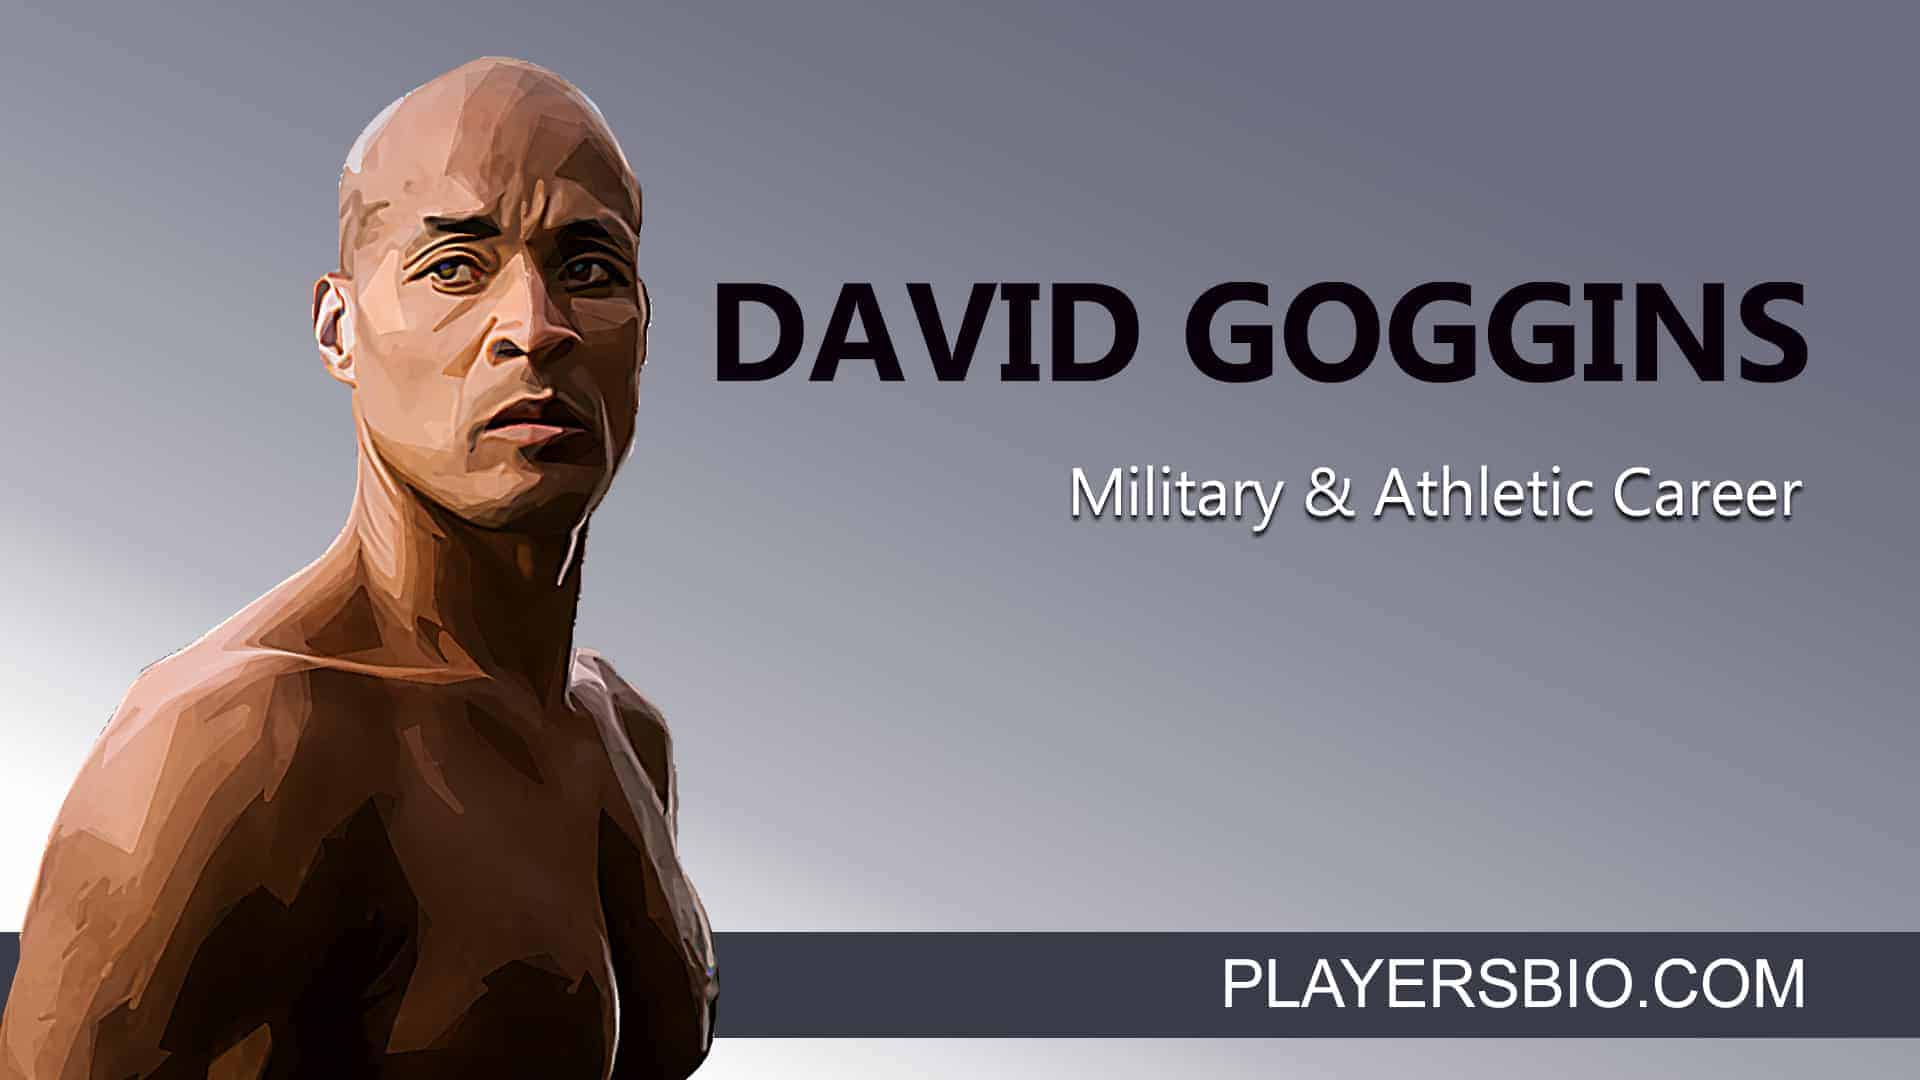 David Goggins Bio 2022 Update : Career, Athlete, Wife & Net Worth.